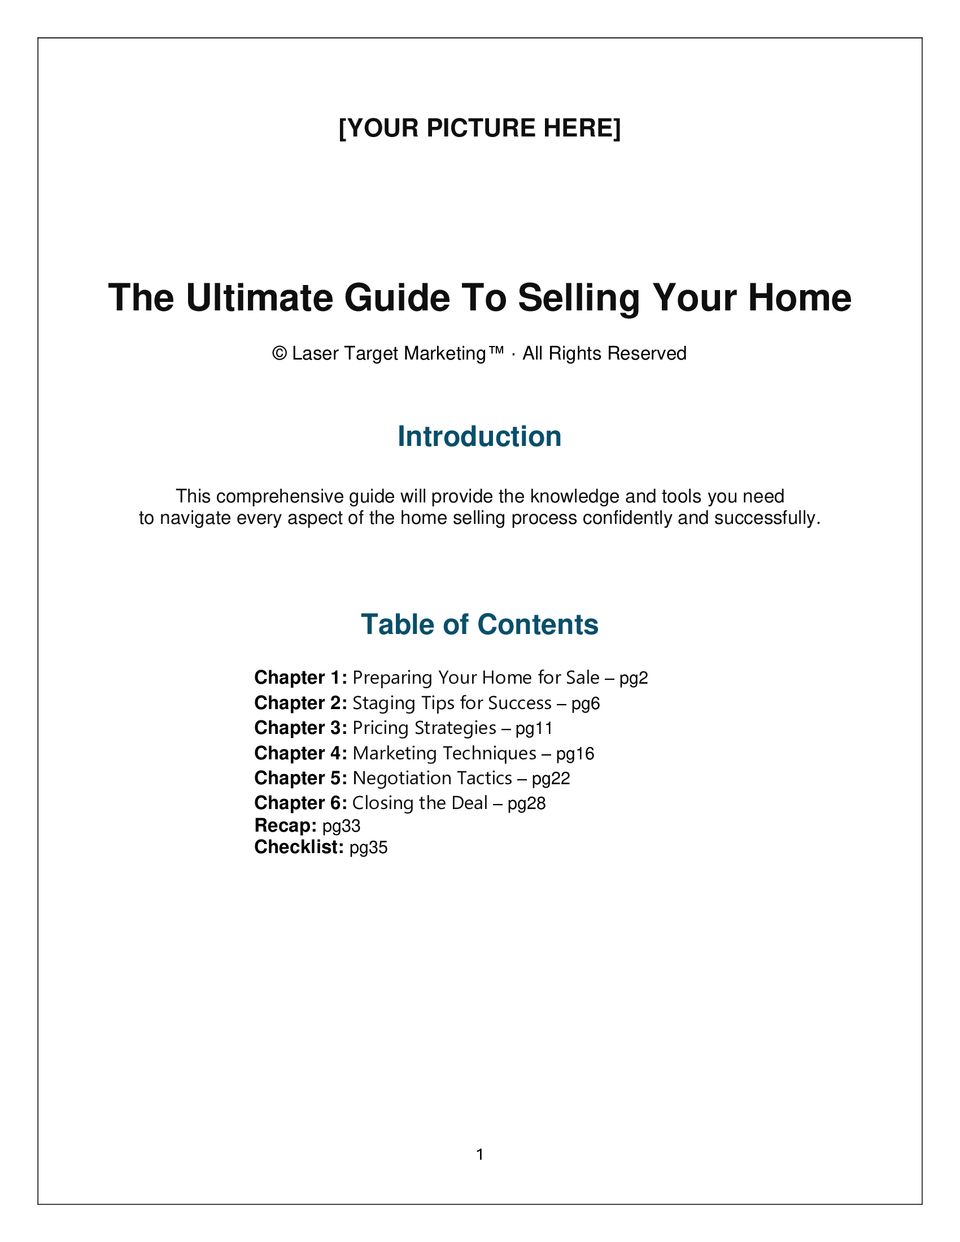 Sample home seller ebook